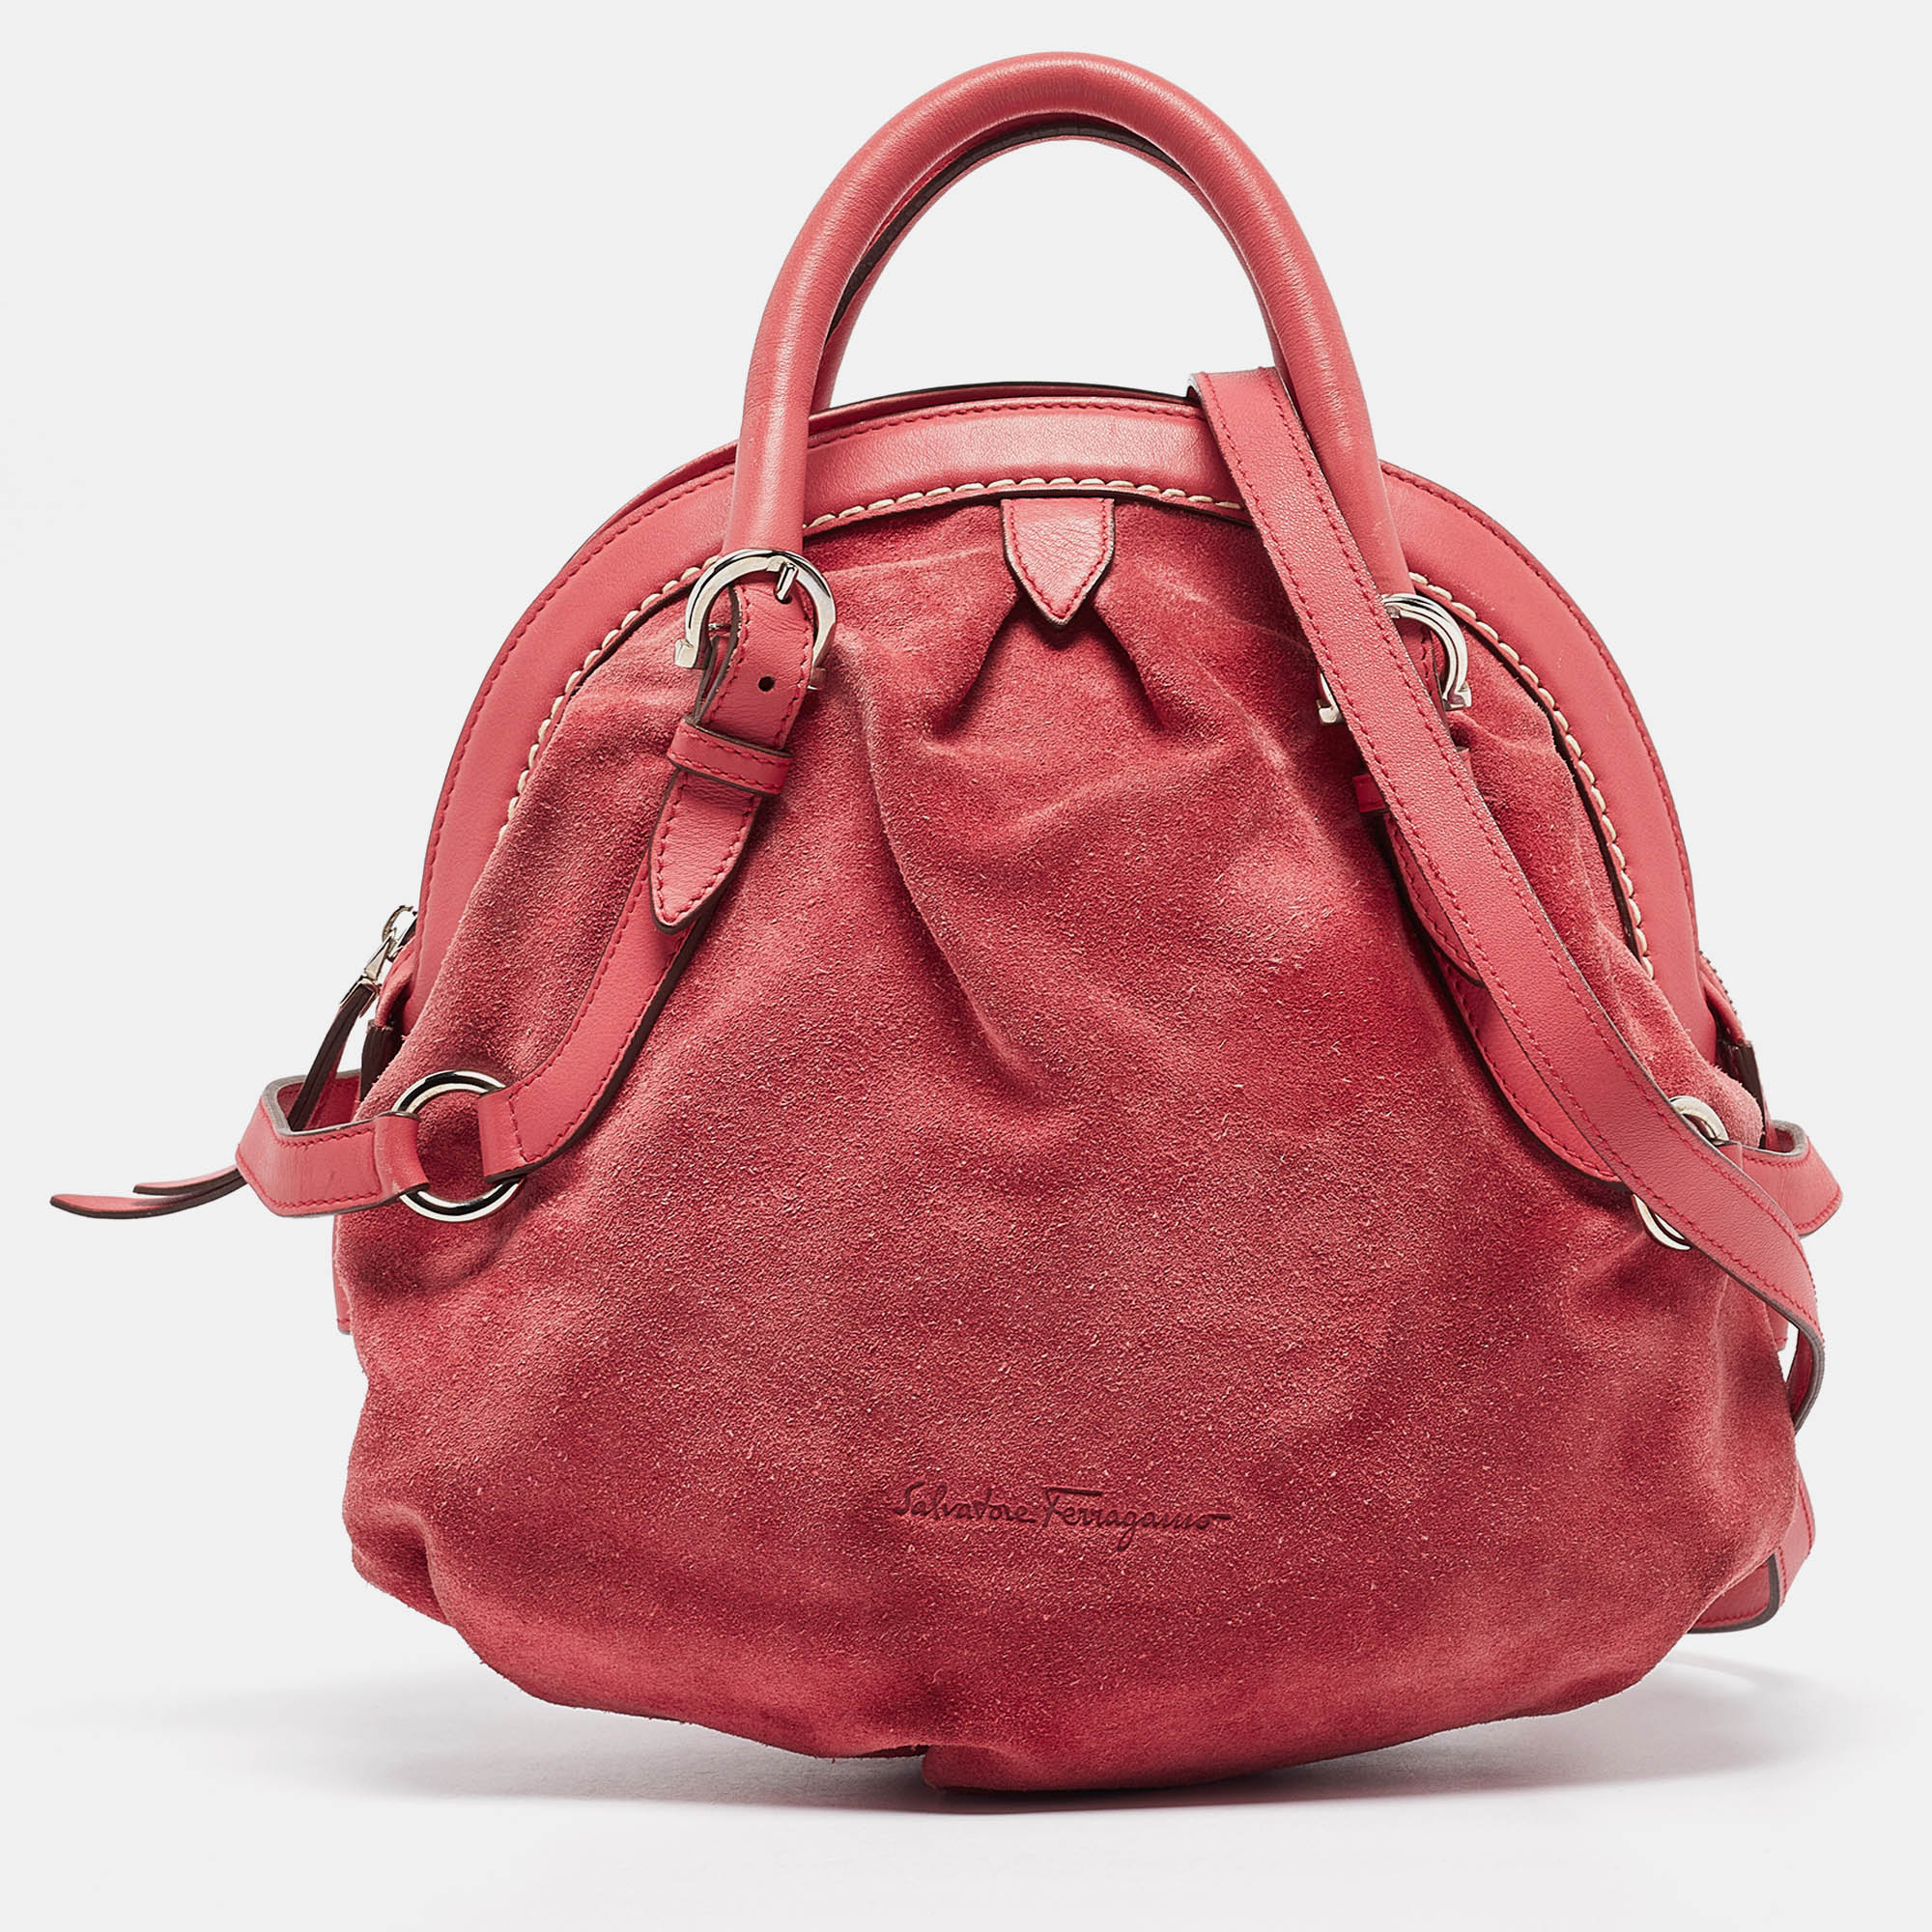 Salvatore ferragamo pink suede and leather buckle satchel